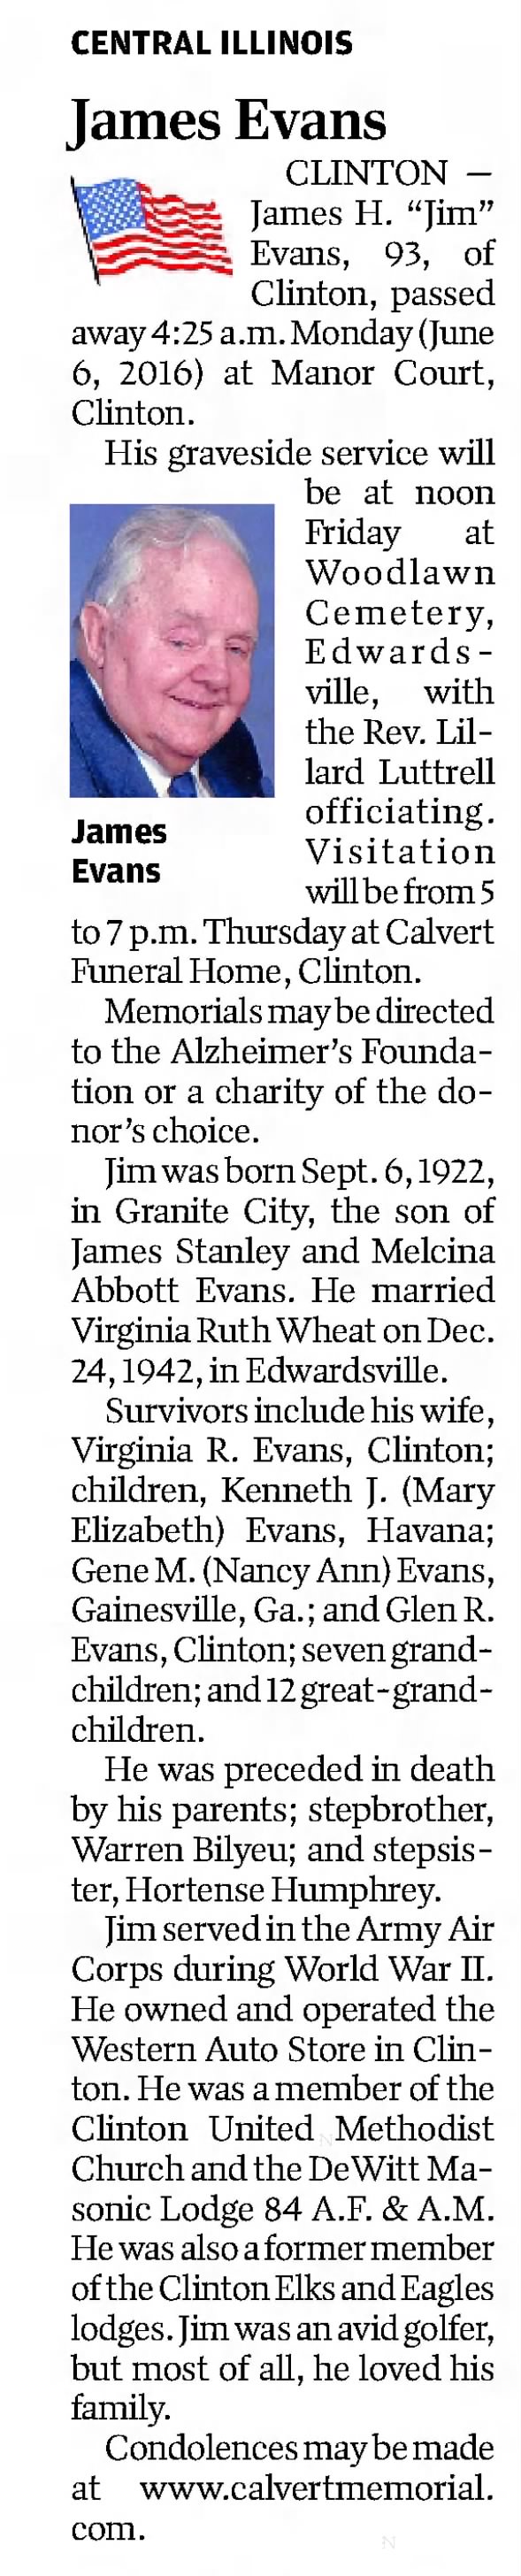 Obituary for James H. Evans, 1922-2016 (Aged 93)